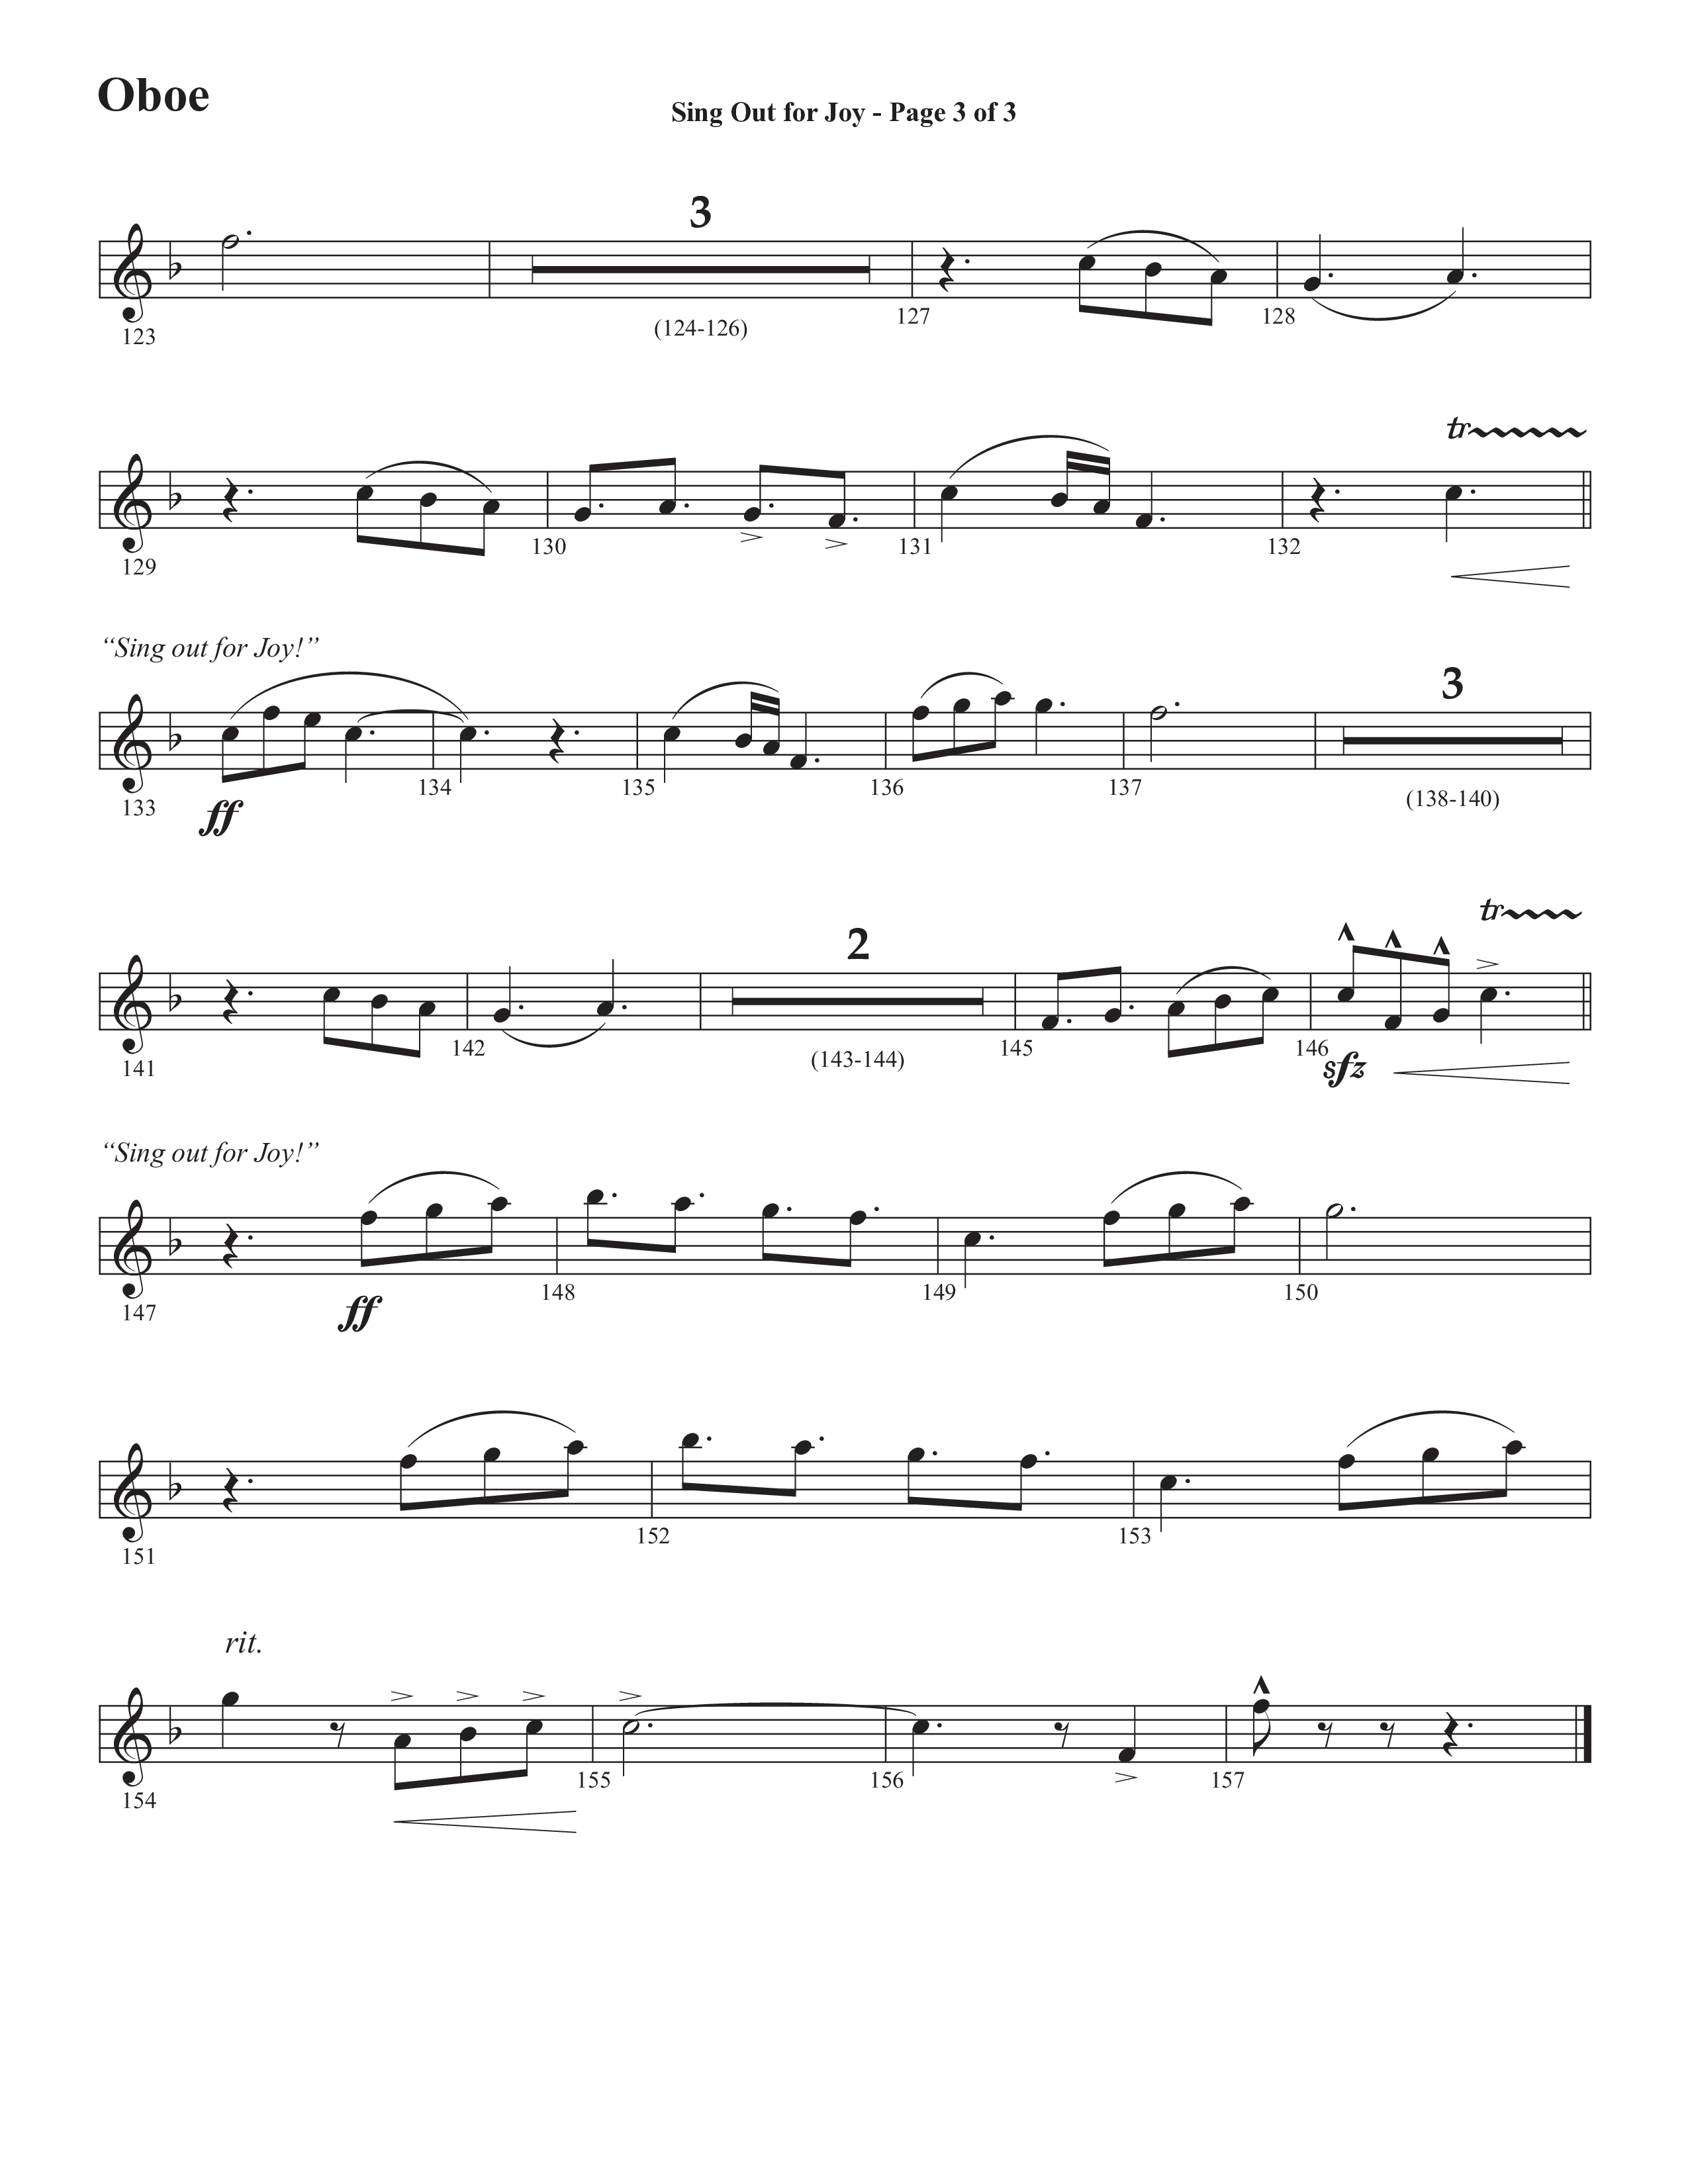 Sing Out For Joy (Choral Anthem SATB) Oboe (Semsen Music / Arr. John Bolin / Orch. Cliff Duren)